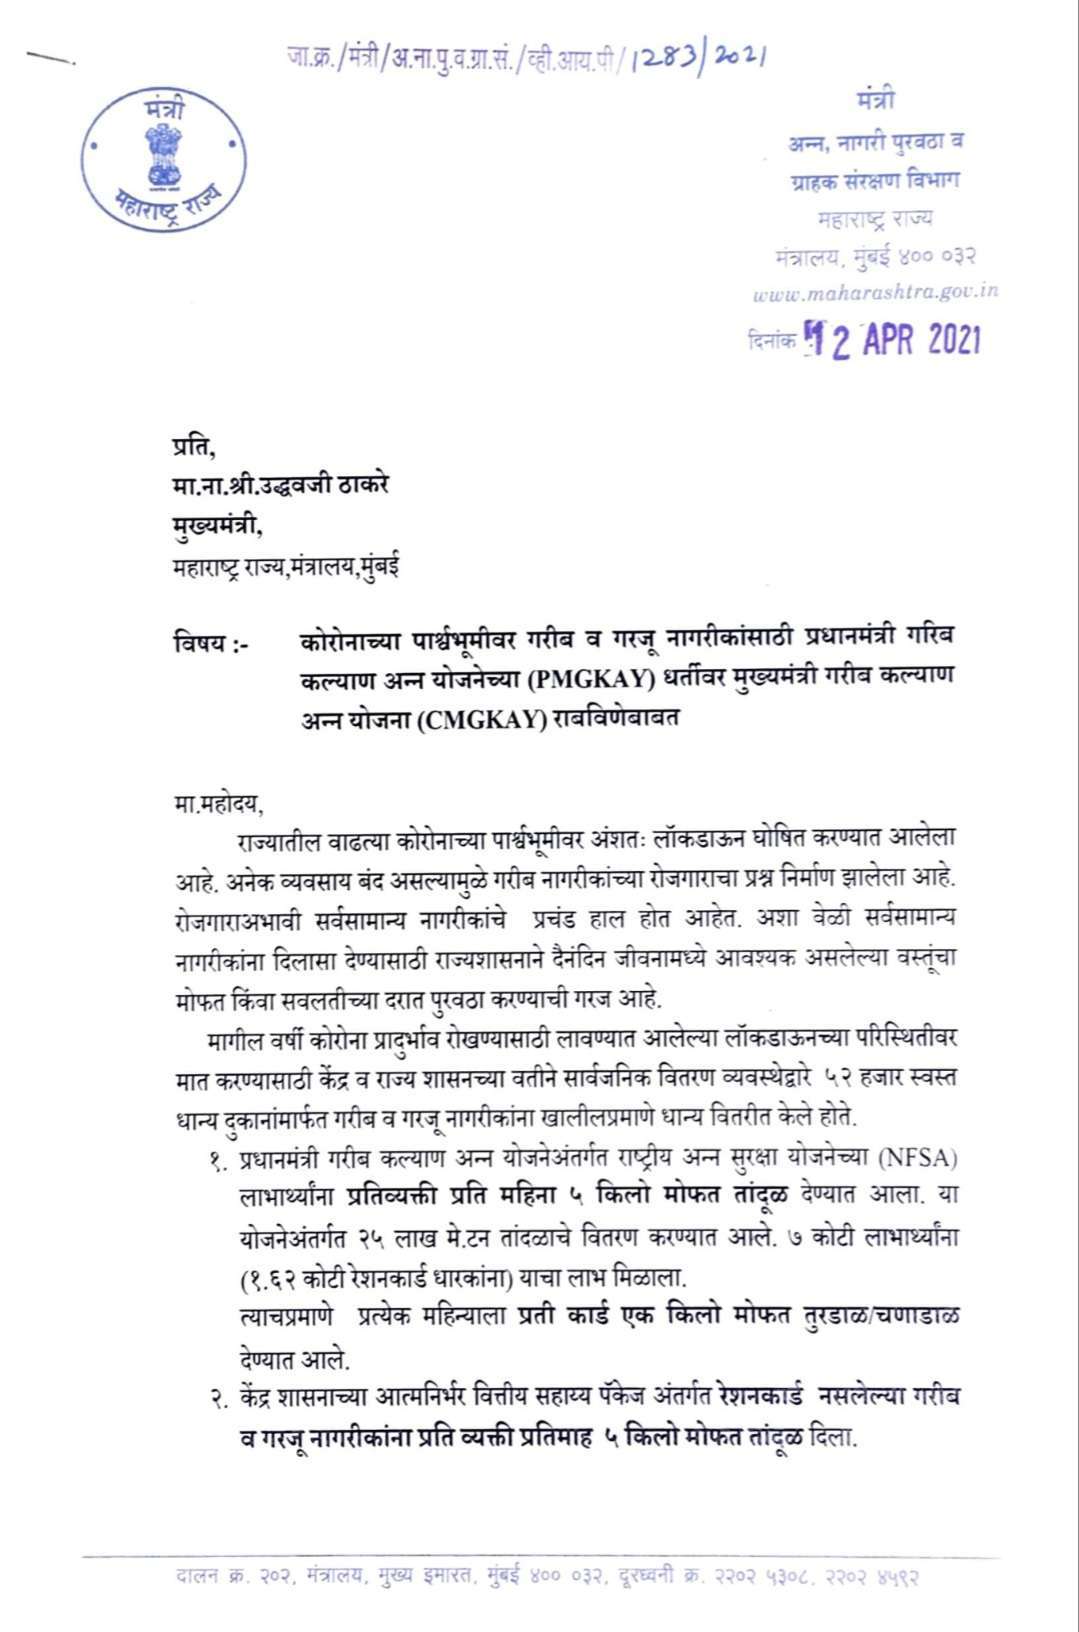 chagan bhujbal letter 